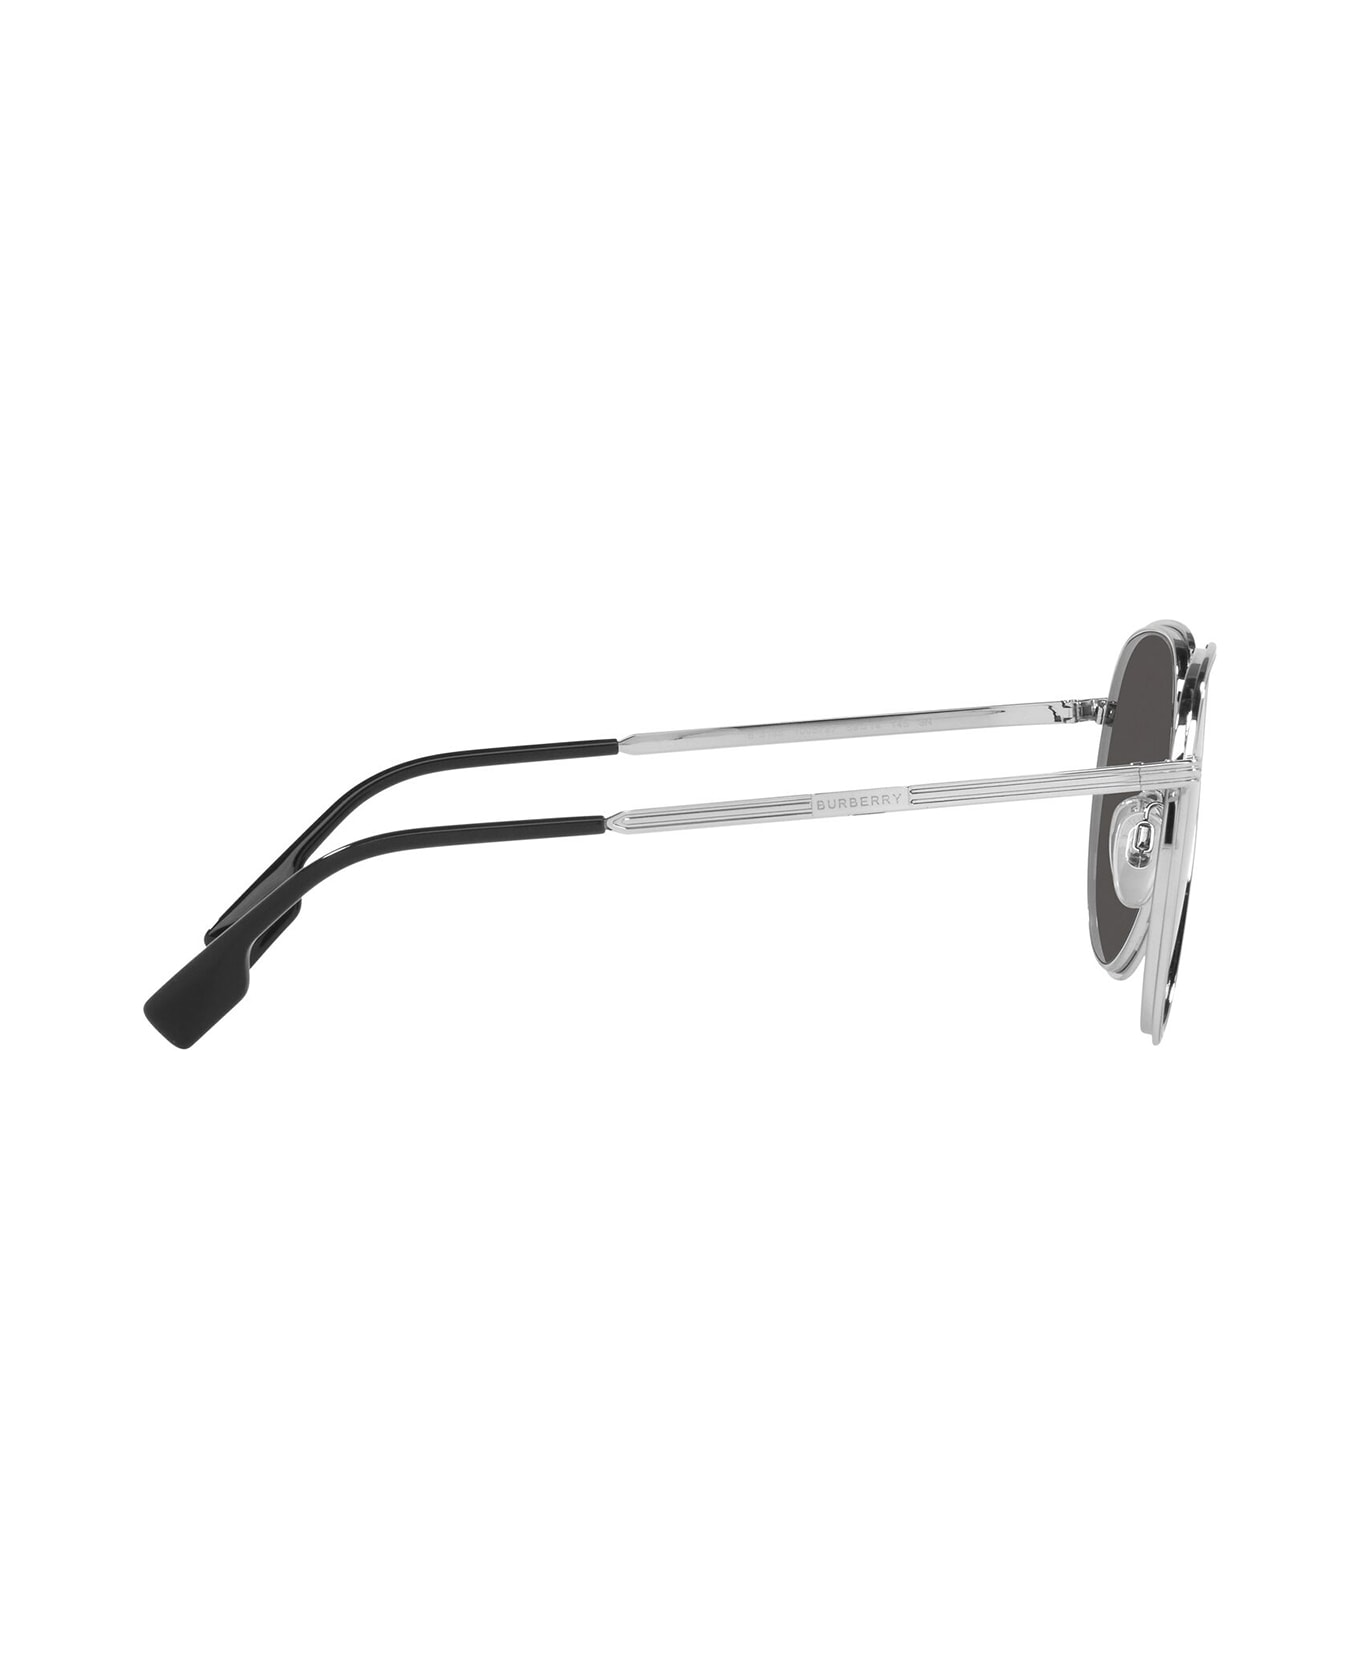 Burberry Eyewear Be3135 Silver Sunglasses - Silver